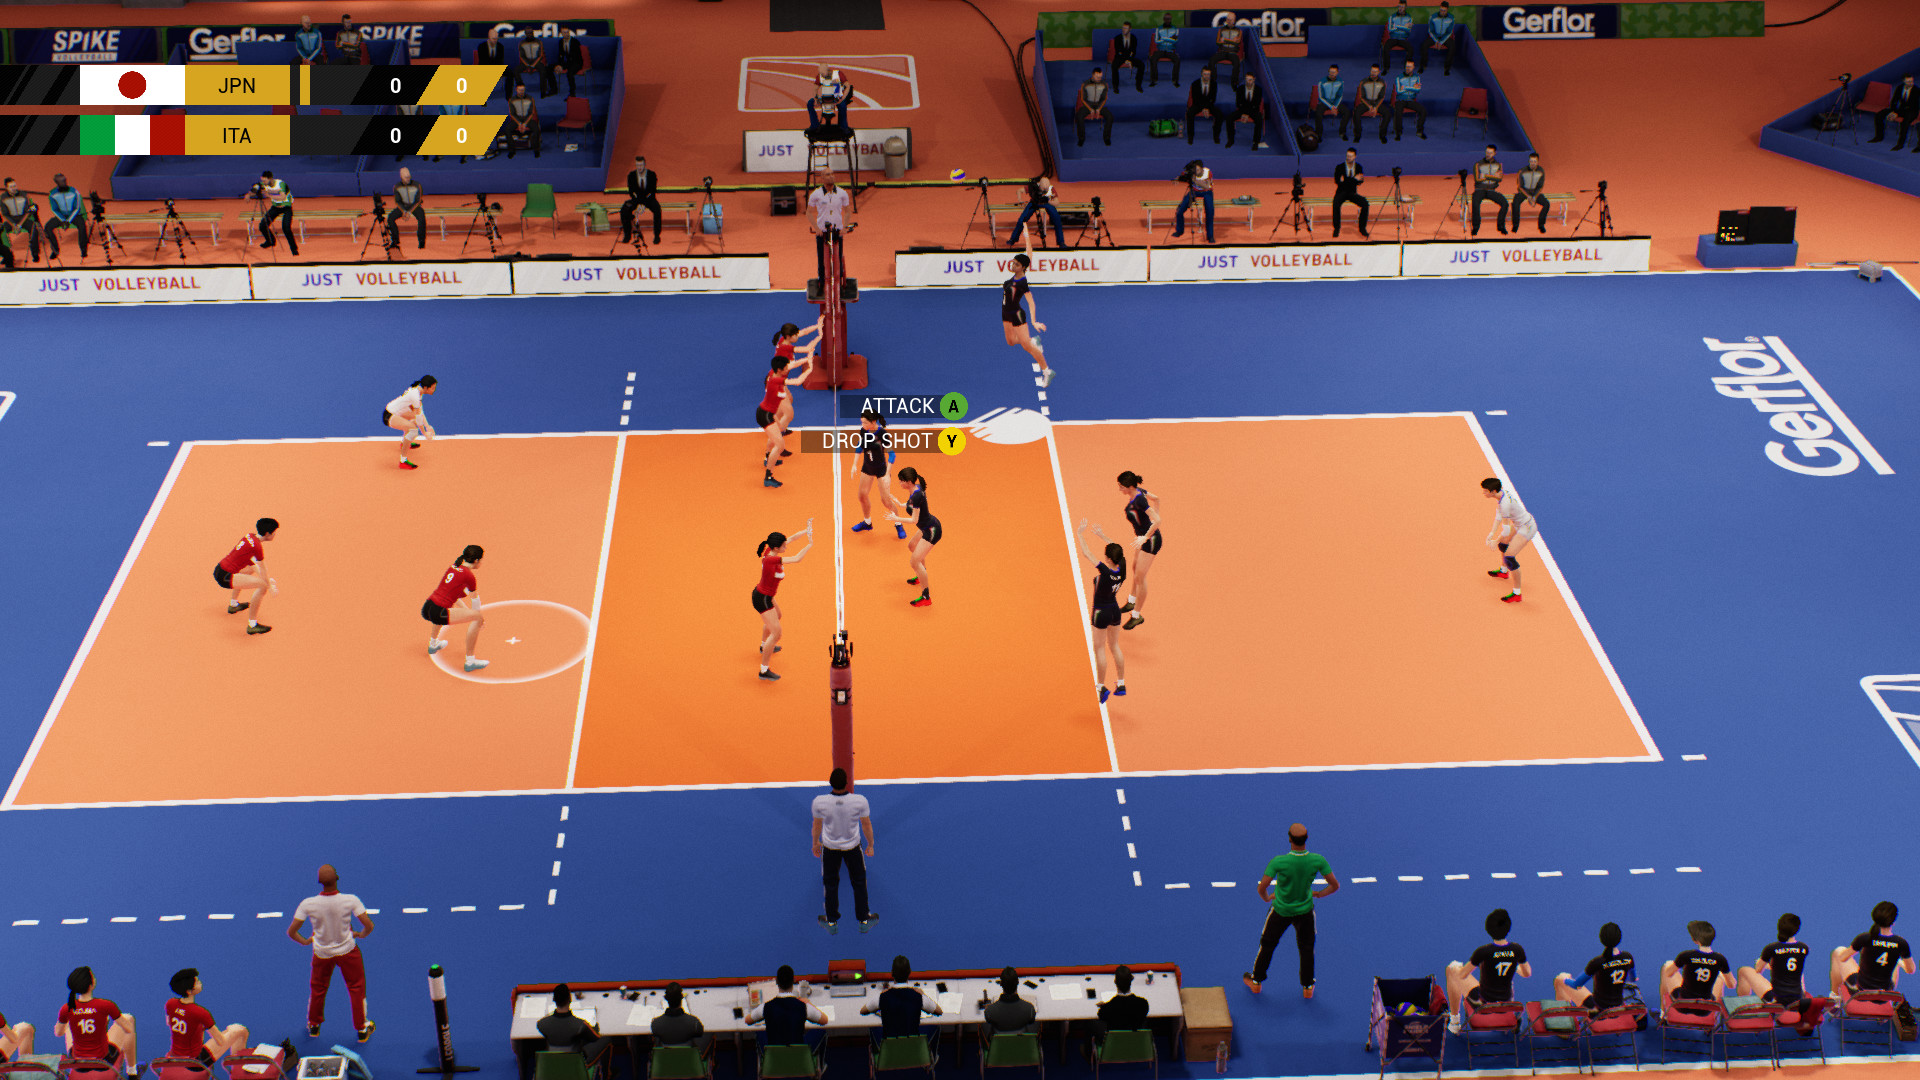 Spike Volleyball on Steam